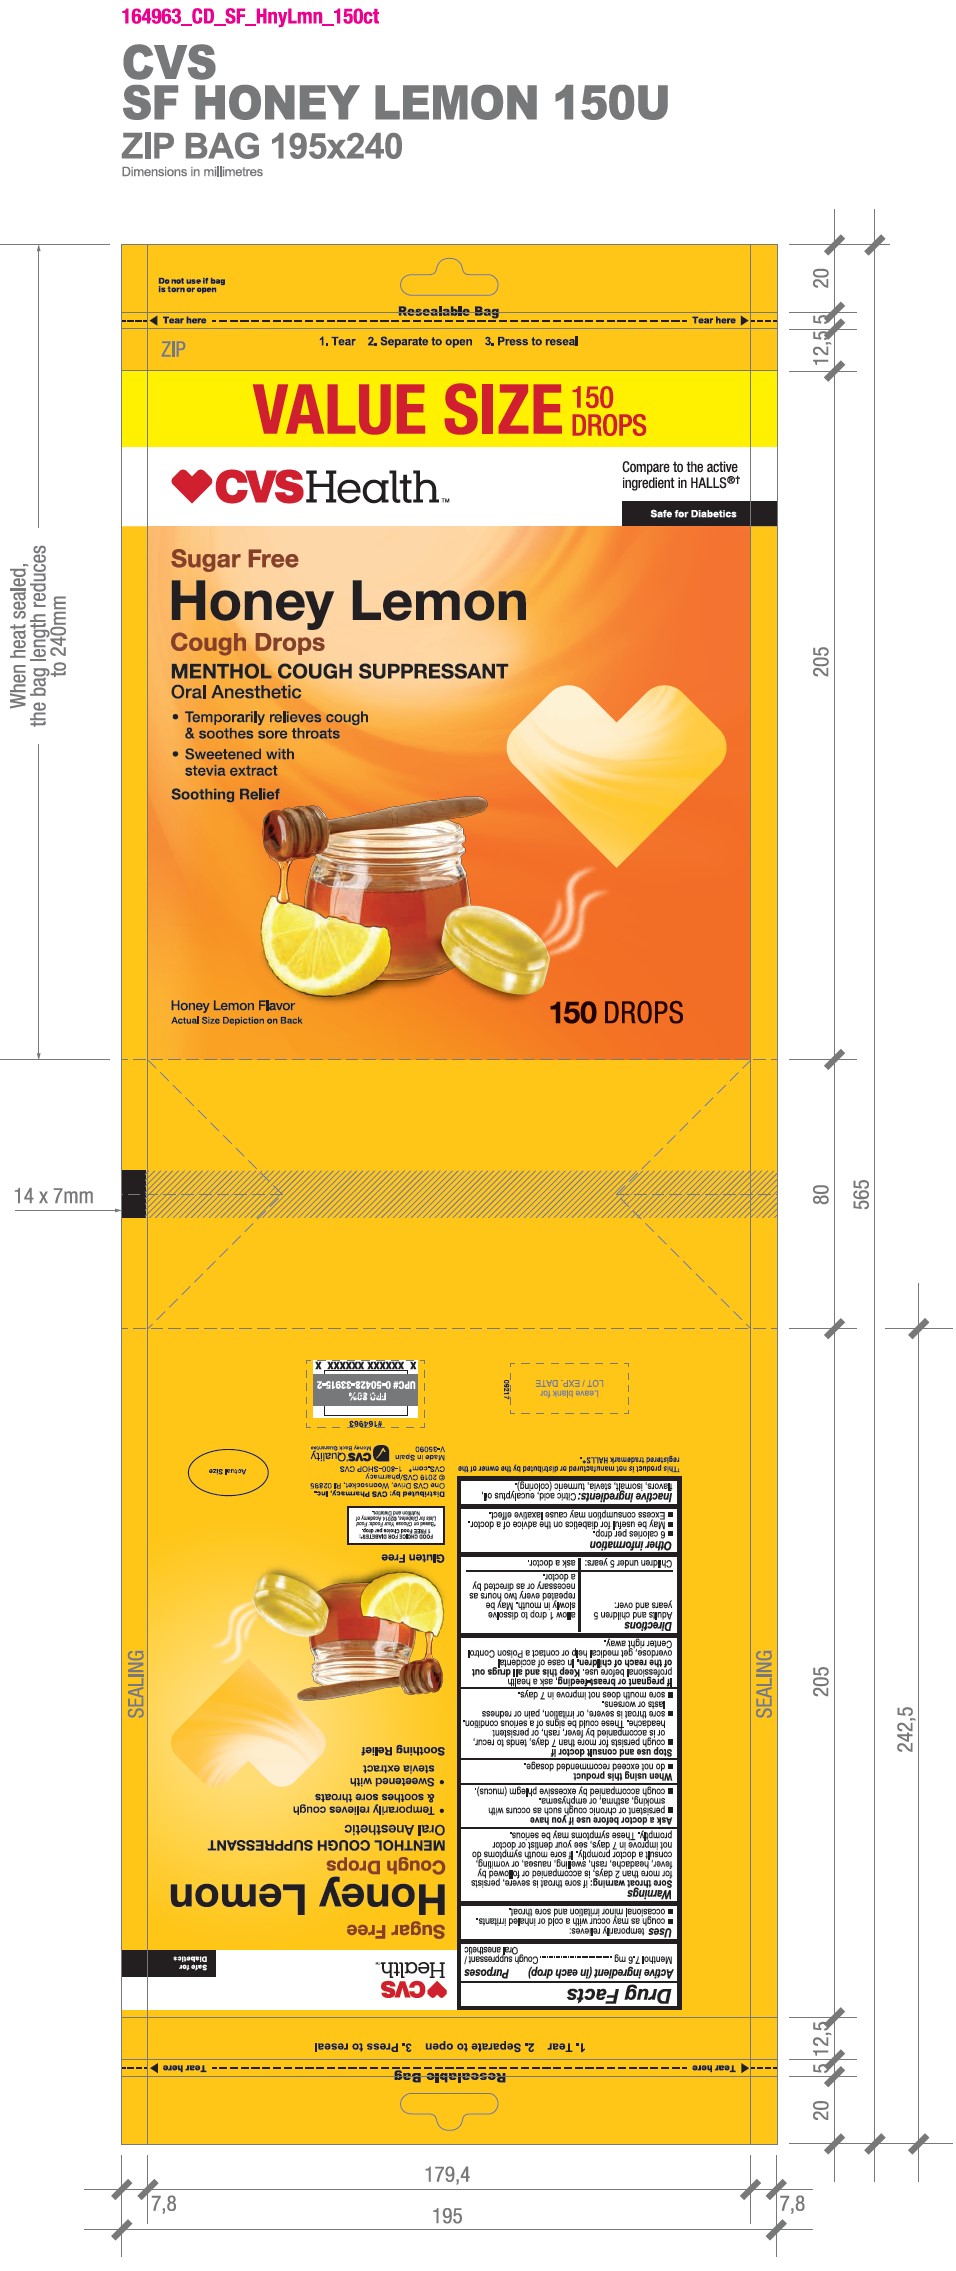 Honey Lemon Cough Drops | Menthol 7.6 Mg while Breastfeeding